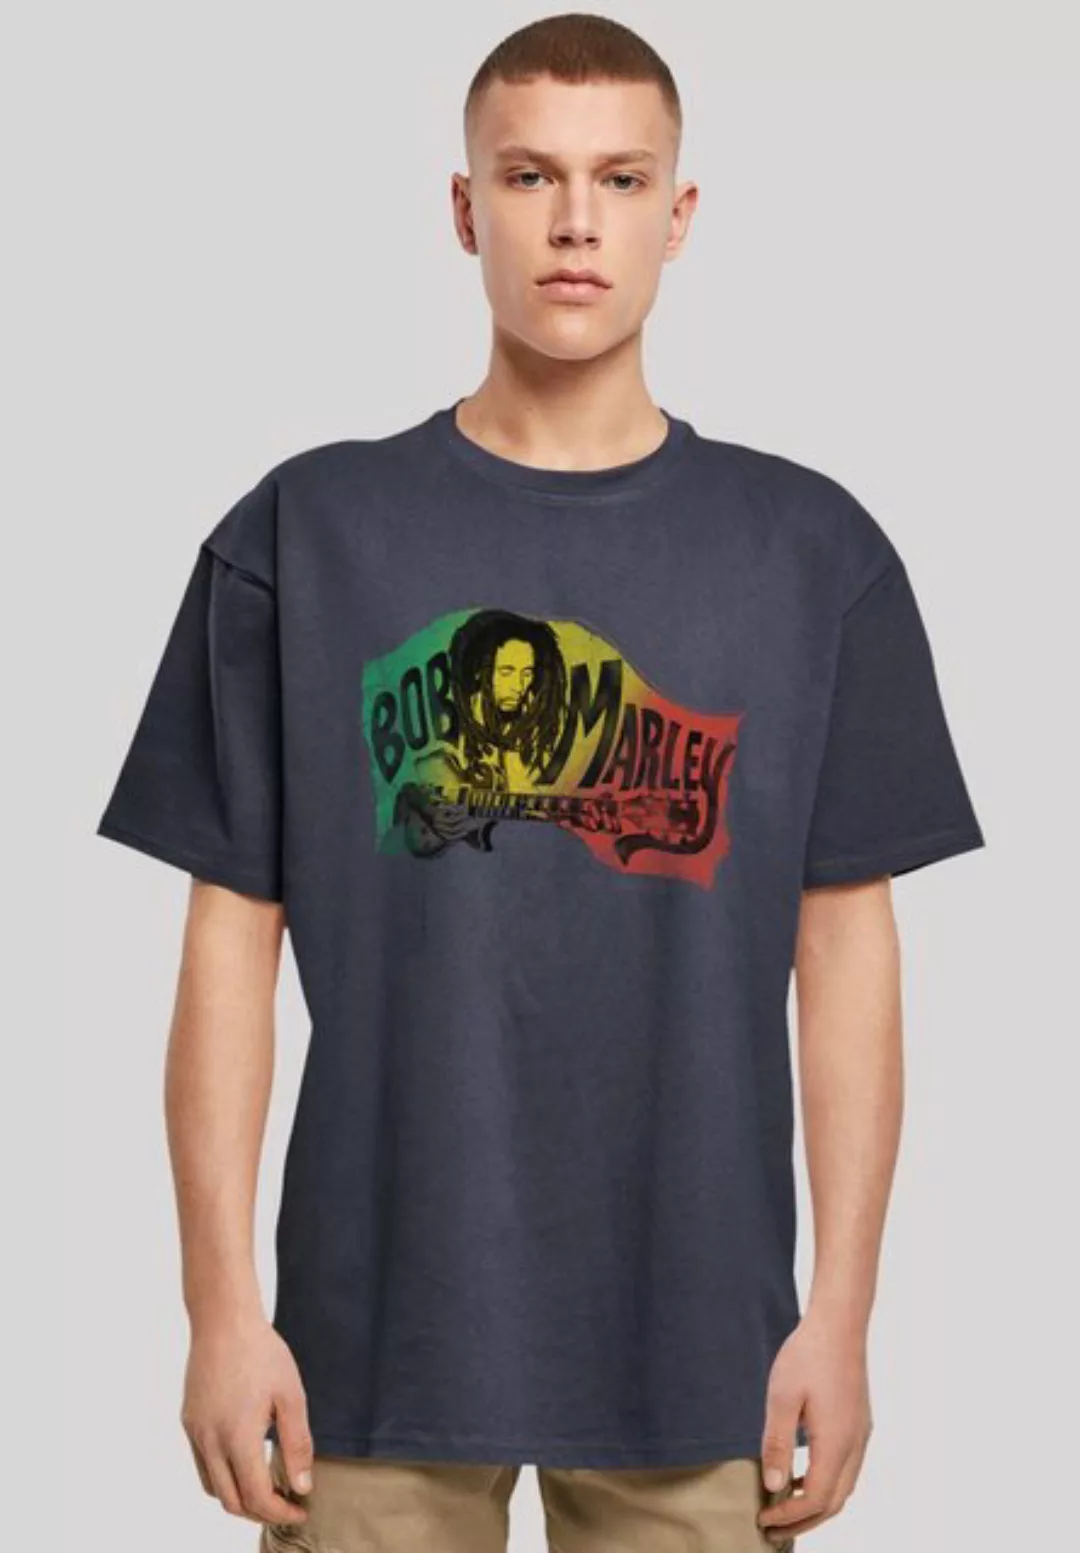 F4NT4STIC T-Shirt Bob Marley Chords Reggae Music by Rock Off Premium Qualit günstig online kaufen